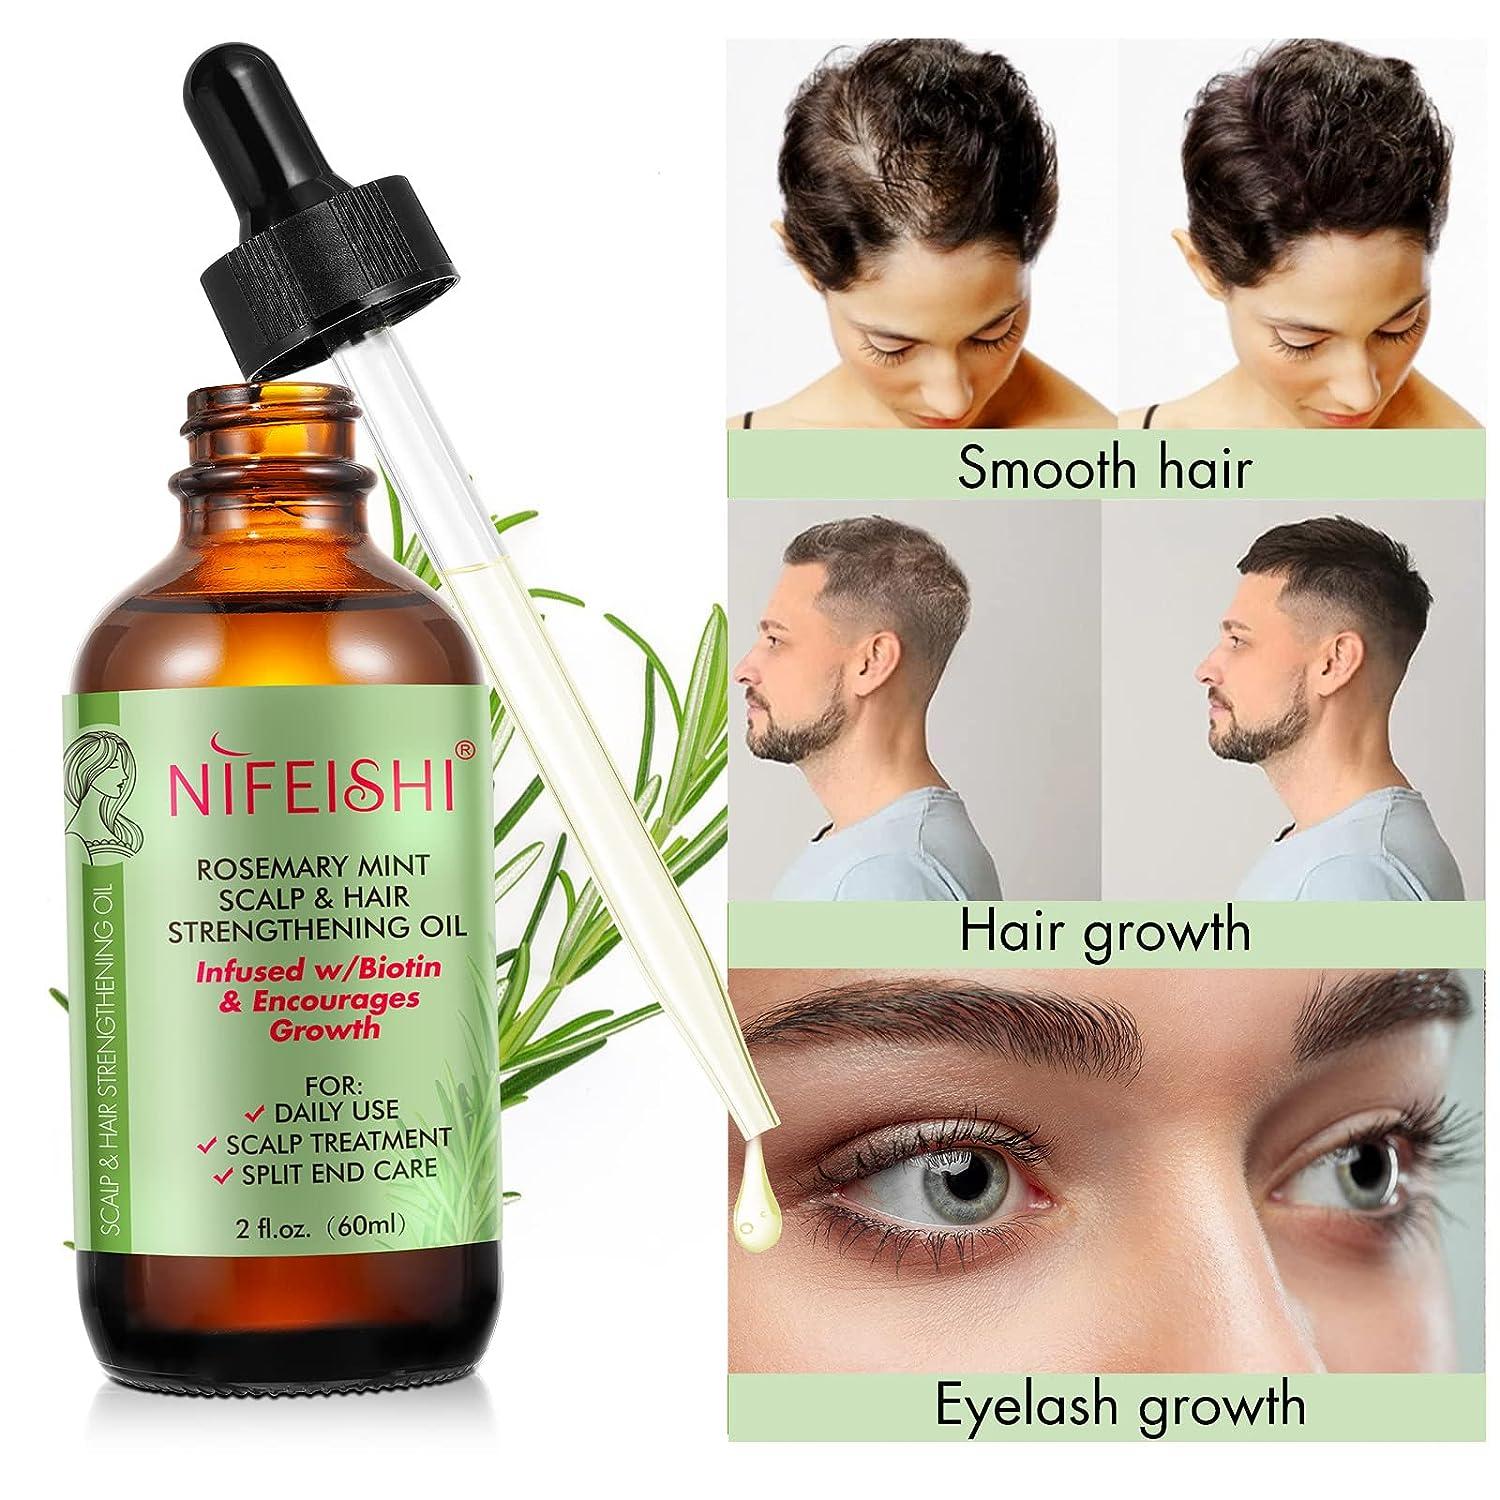 Rosemary Essential Oil (2 fl oz),Rosemary Oil for Hair Growth & Skin  Care,Dry Scalp Treatment, Hair Growth Serum for Hair,Organic Hair Oil